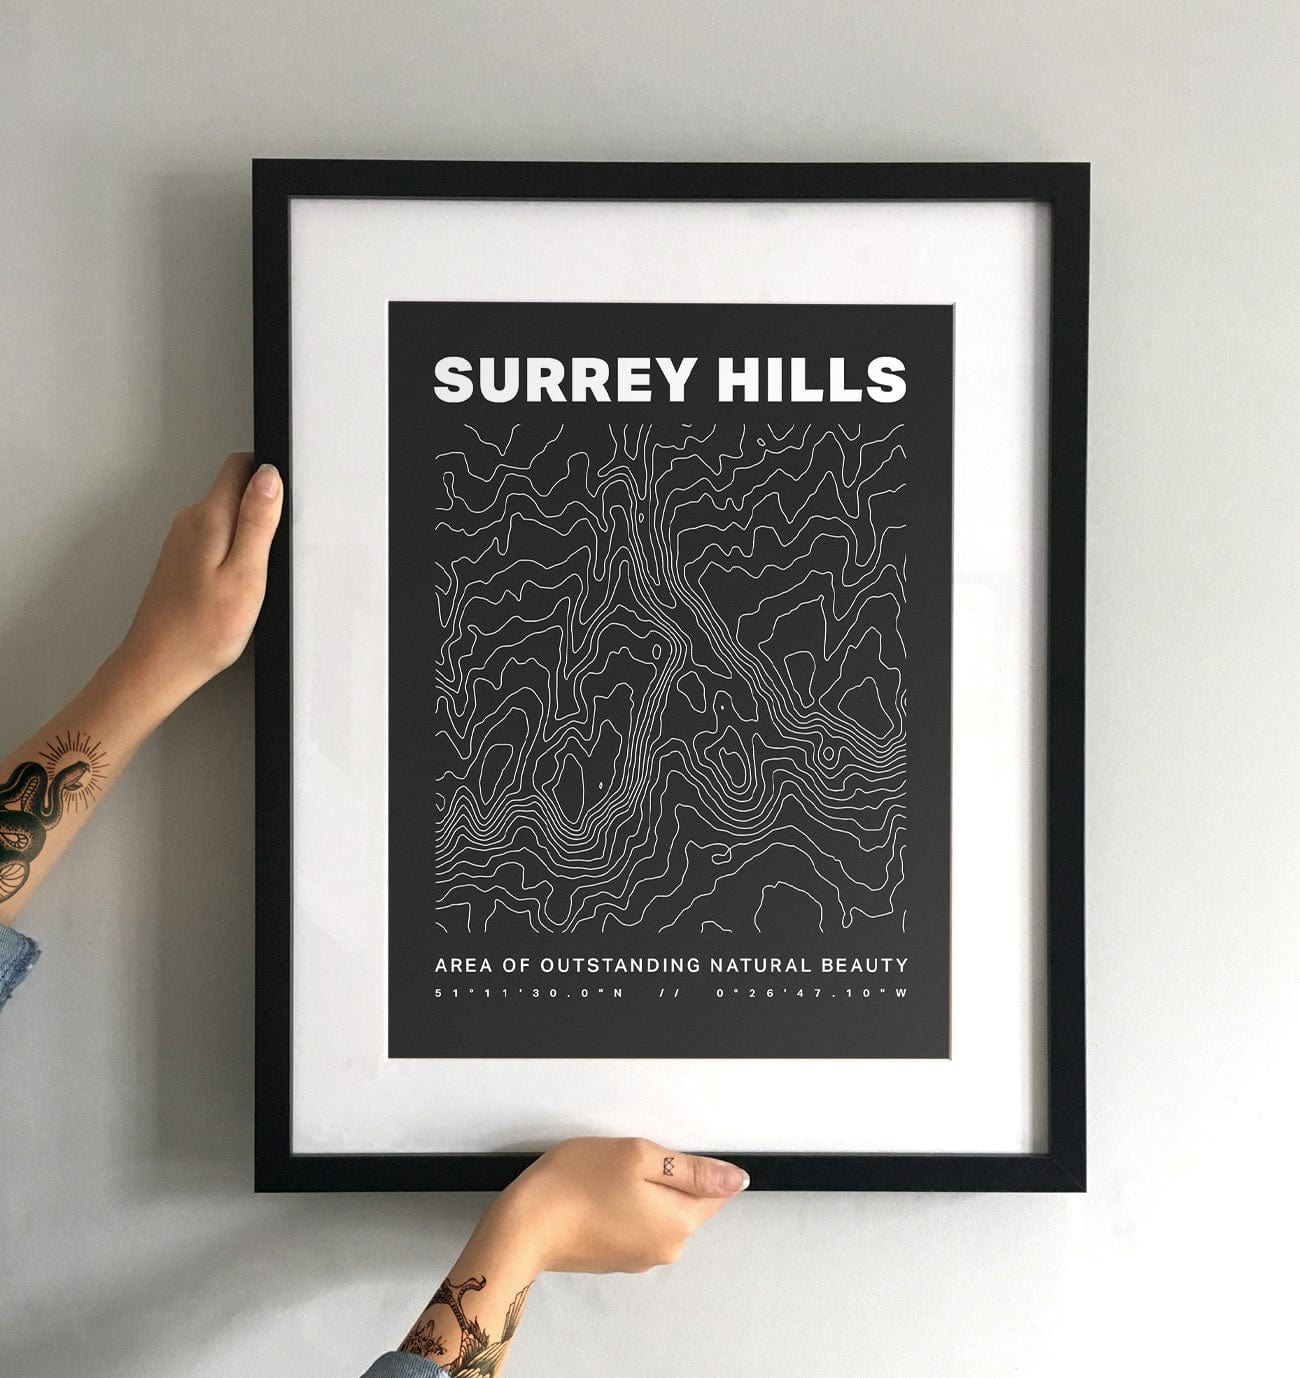 Surrey Hills AONB Contours Art Print